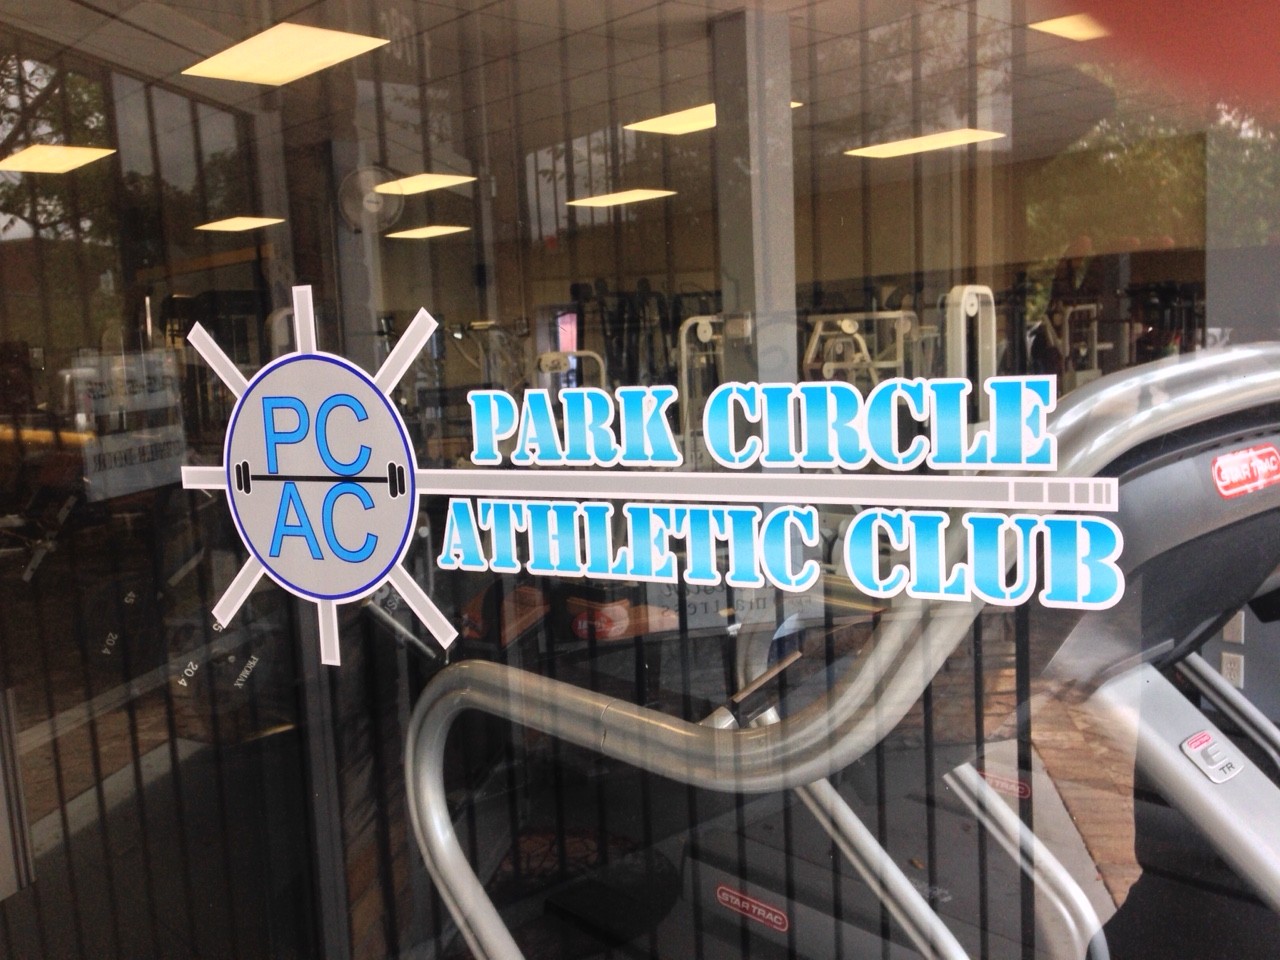 Park Circle Athletic Club